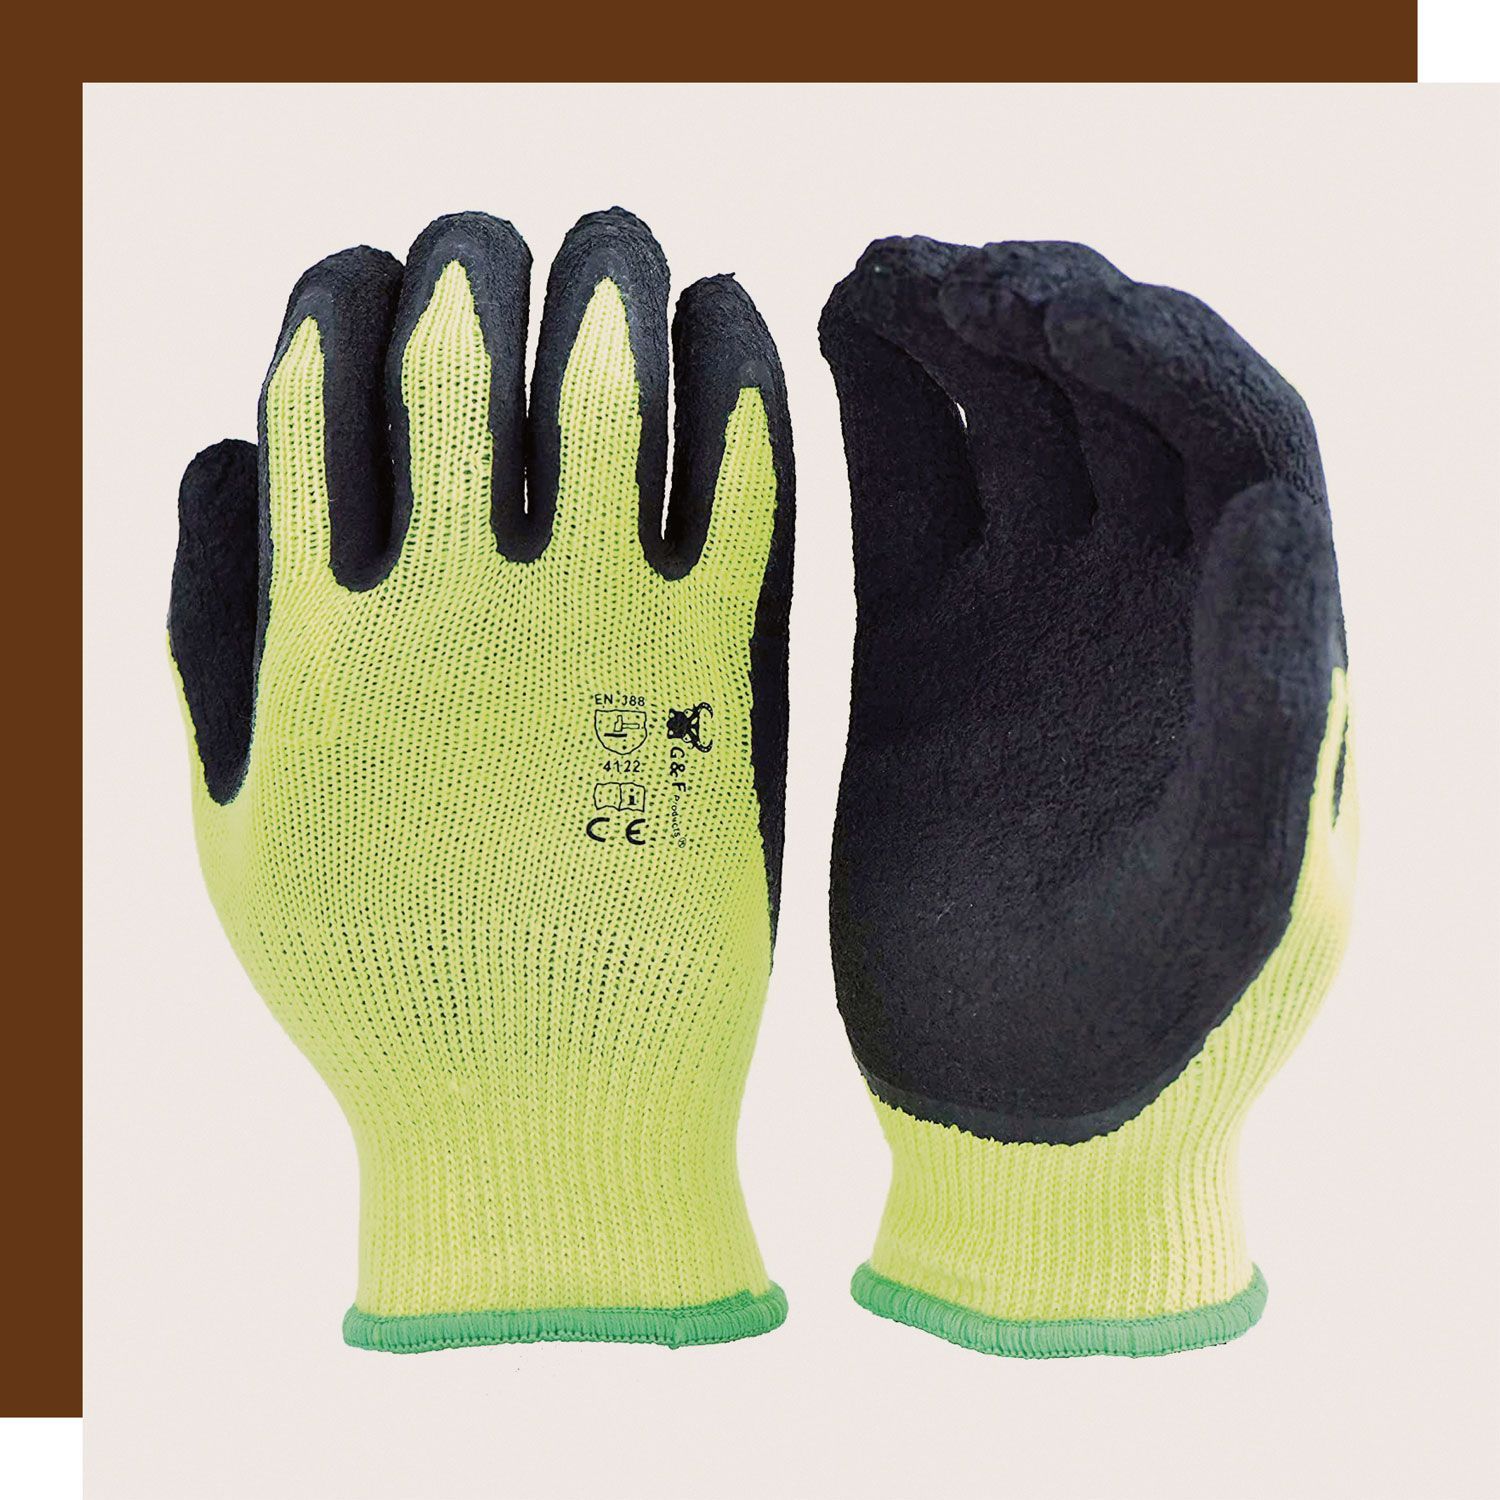 Cheap Gardening Gloves